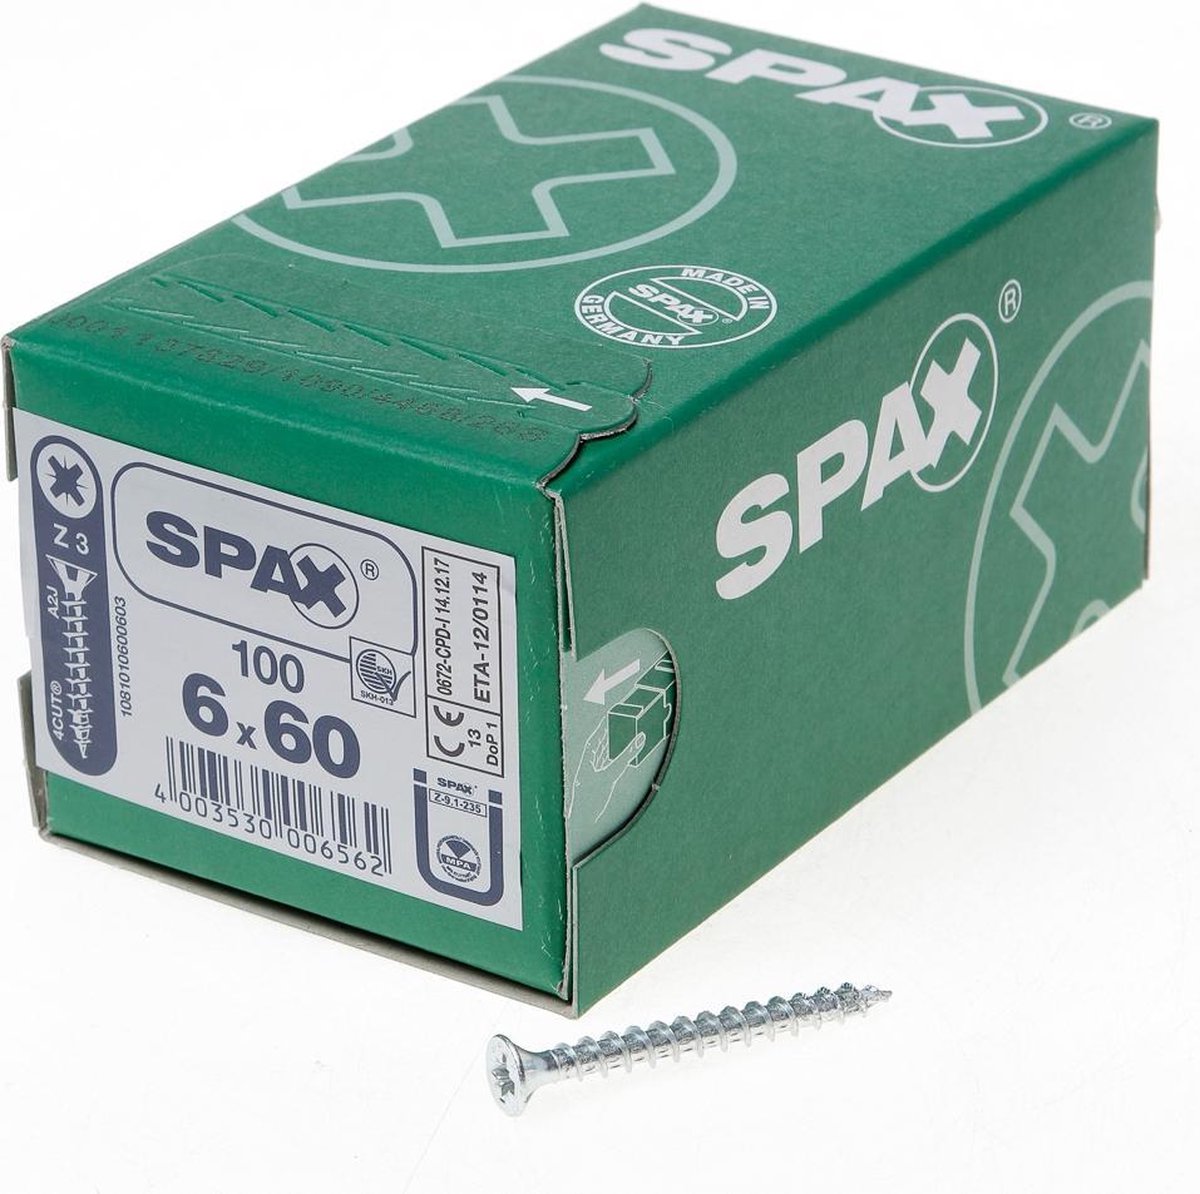 Spax Spaanplaatschroef Verzinkt PK 6.0 x 60 - 100 stuks - Spax